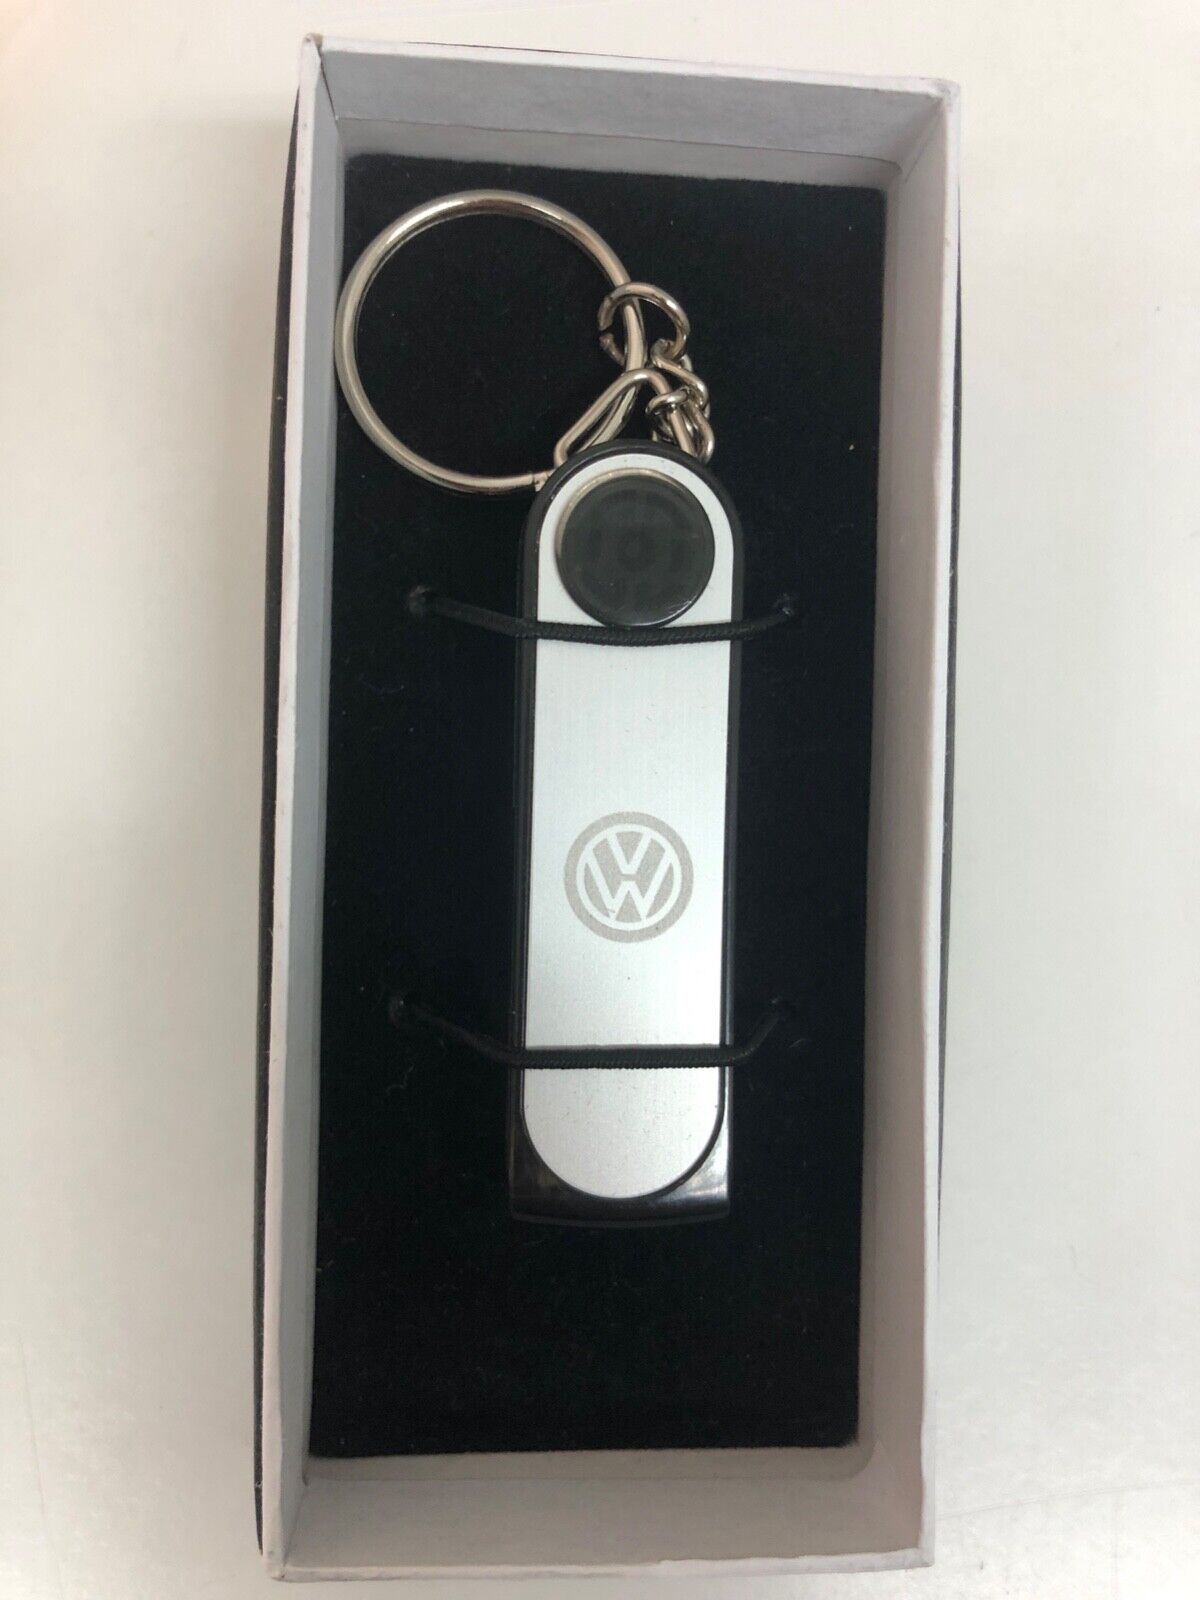 VW Volkswagen USB 2.0 Flash Drive 256MB Key Chain w/ VW Logo - Includes Lanyard